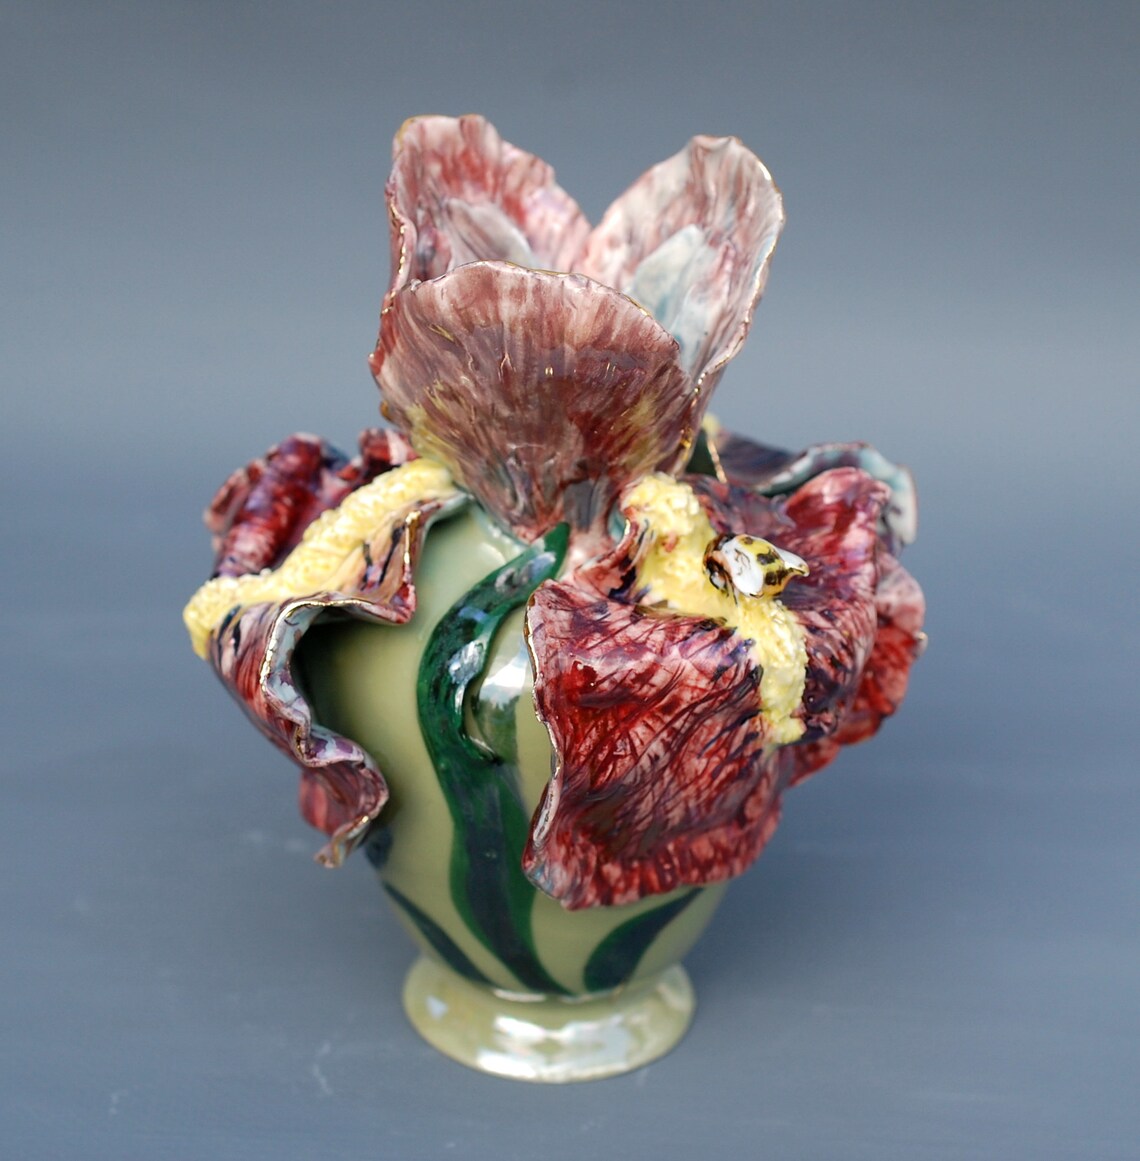 Vase in the shape of a flower Purple iris figurine Decorative | Etsy